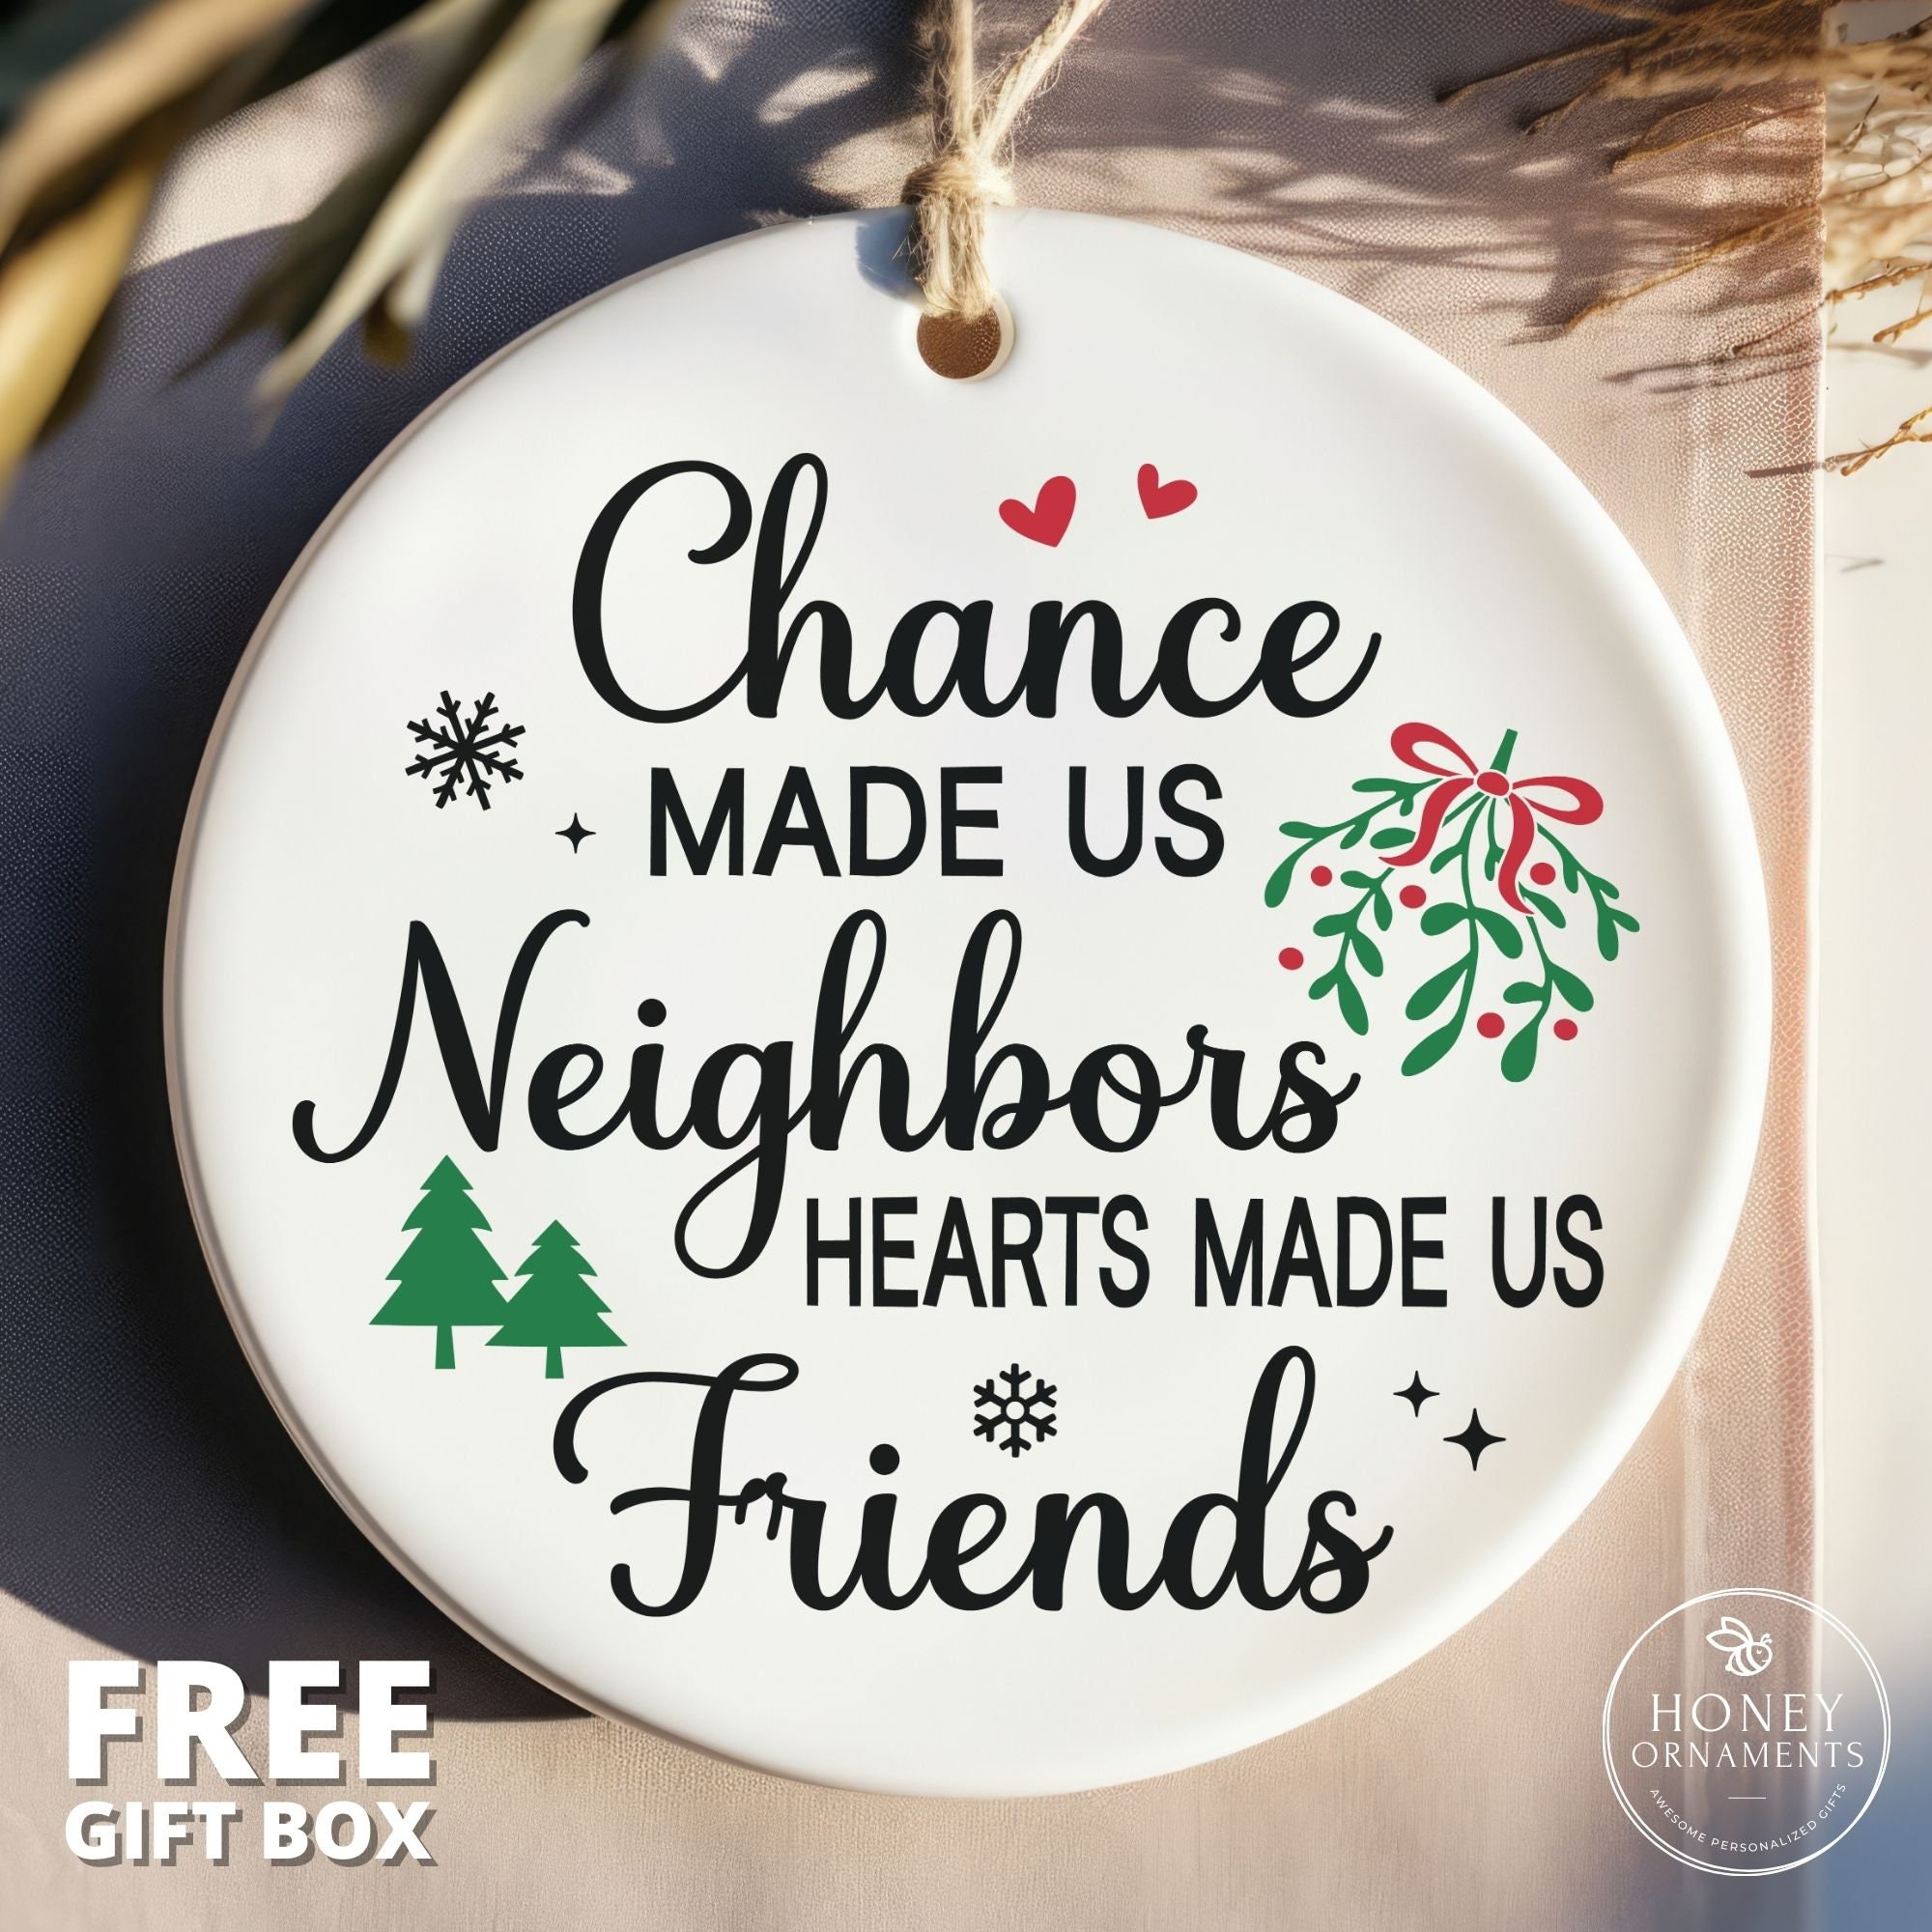 Neighbors Like You are Precious and Few Christmas Ornament 2023 Round  Christmas Tree Ornaments Keepsake Gifts for Neighbors Home Decor Flat  Circle